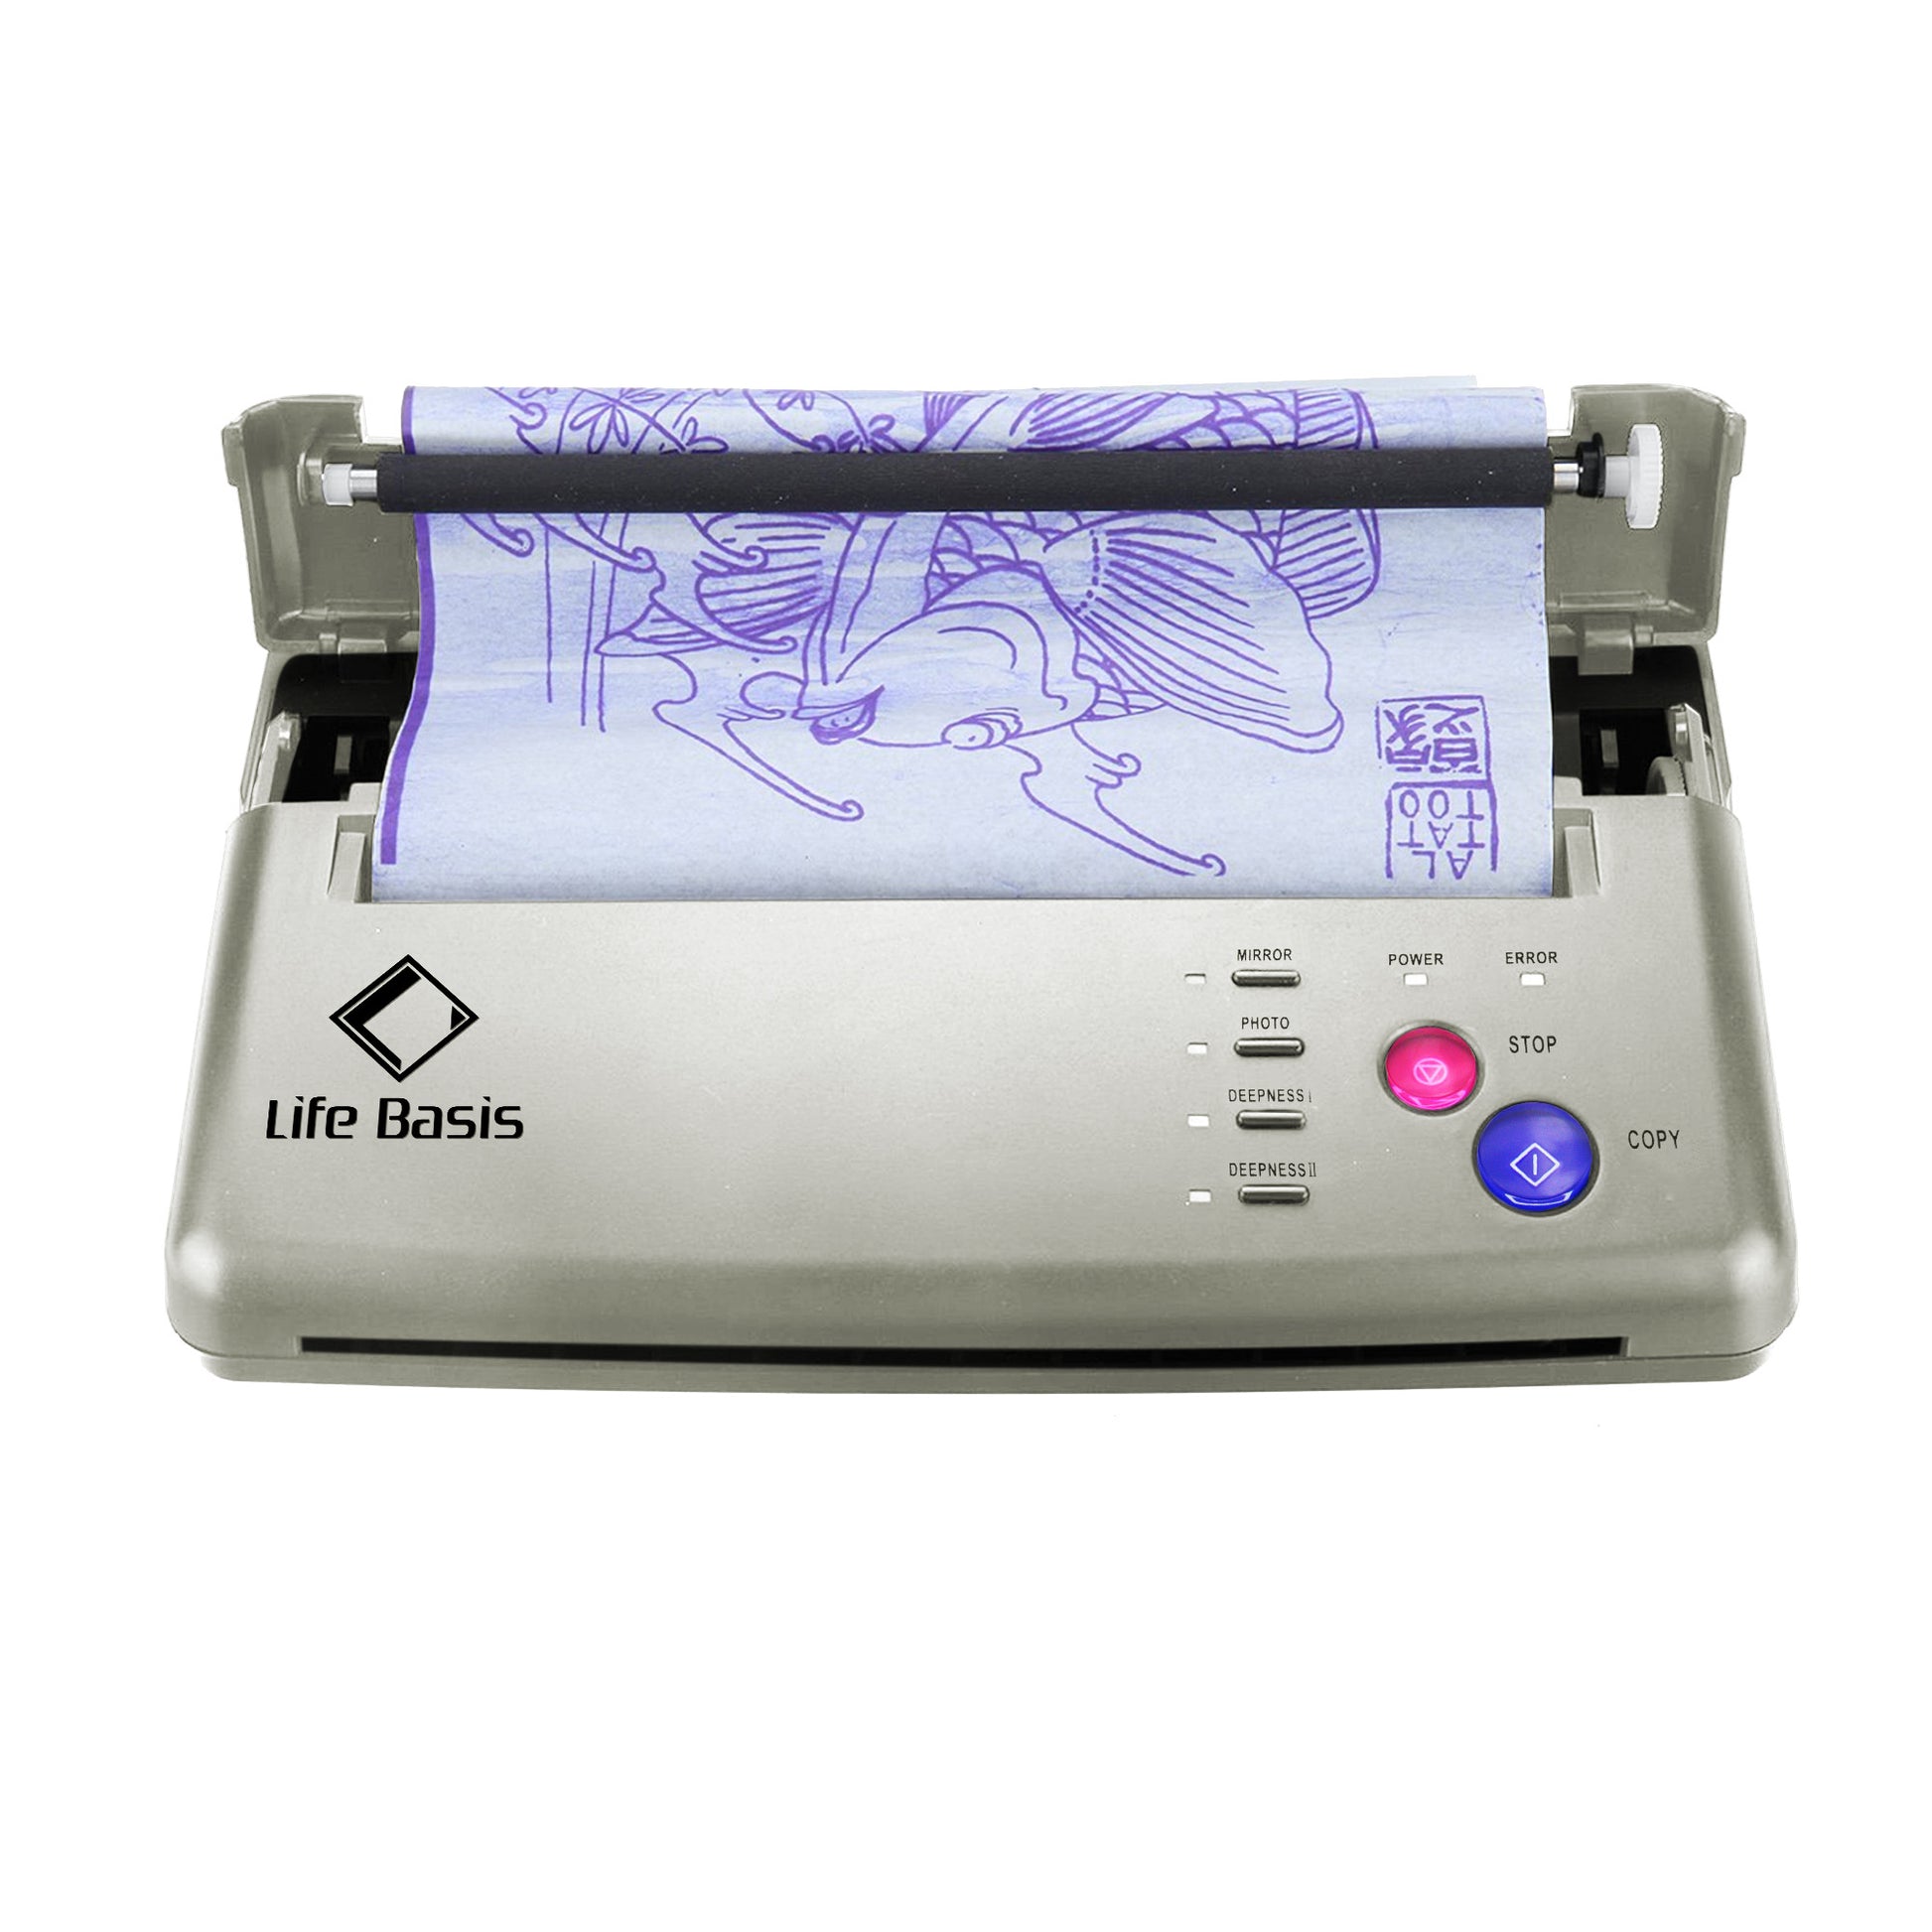 longer lasting tattoo stencil printer transfer